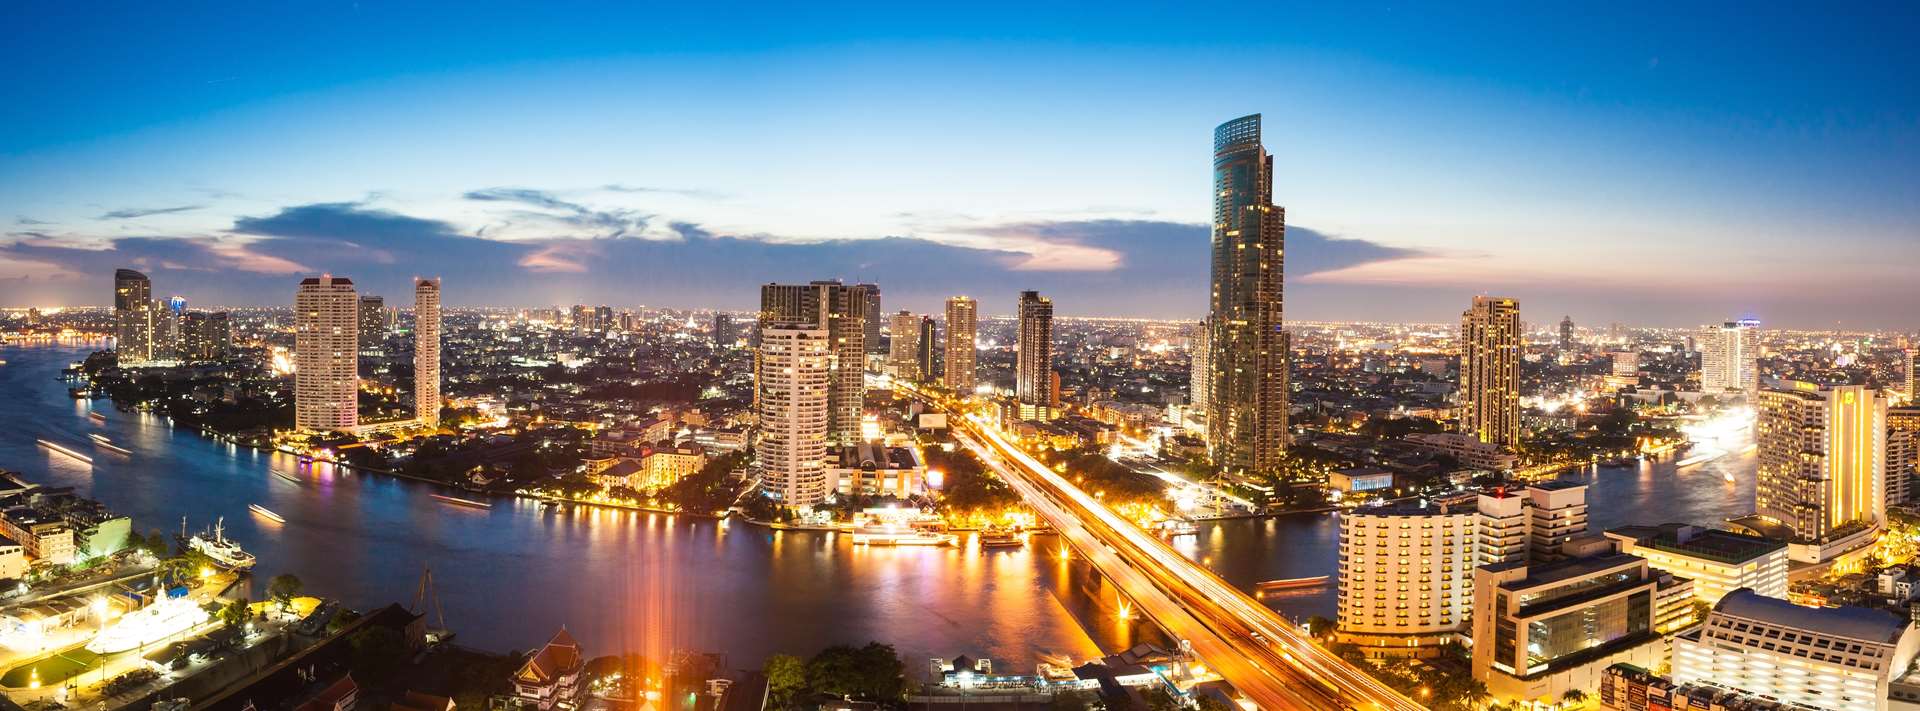 Cheap flights to Bangkok from £348 | Netflights